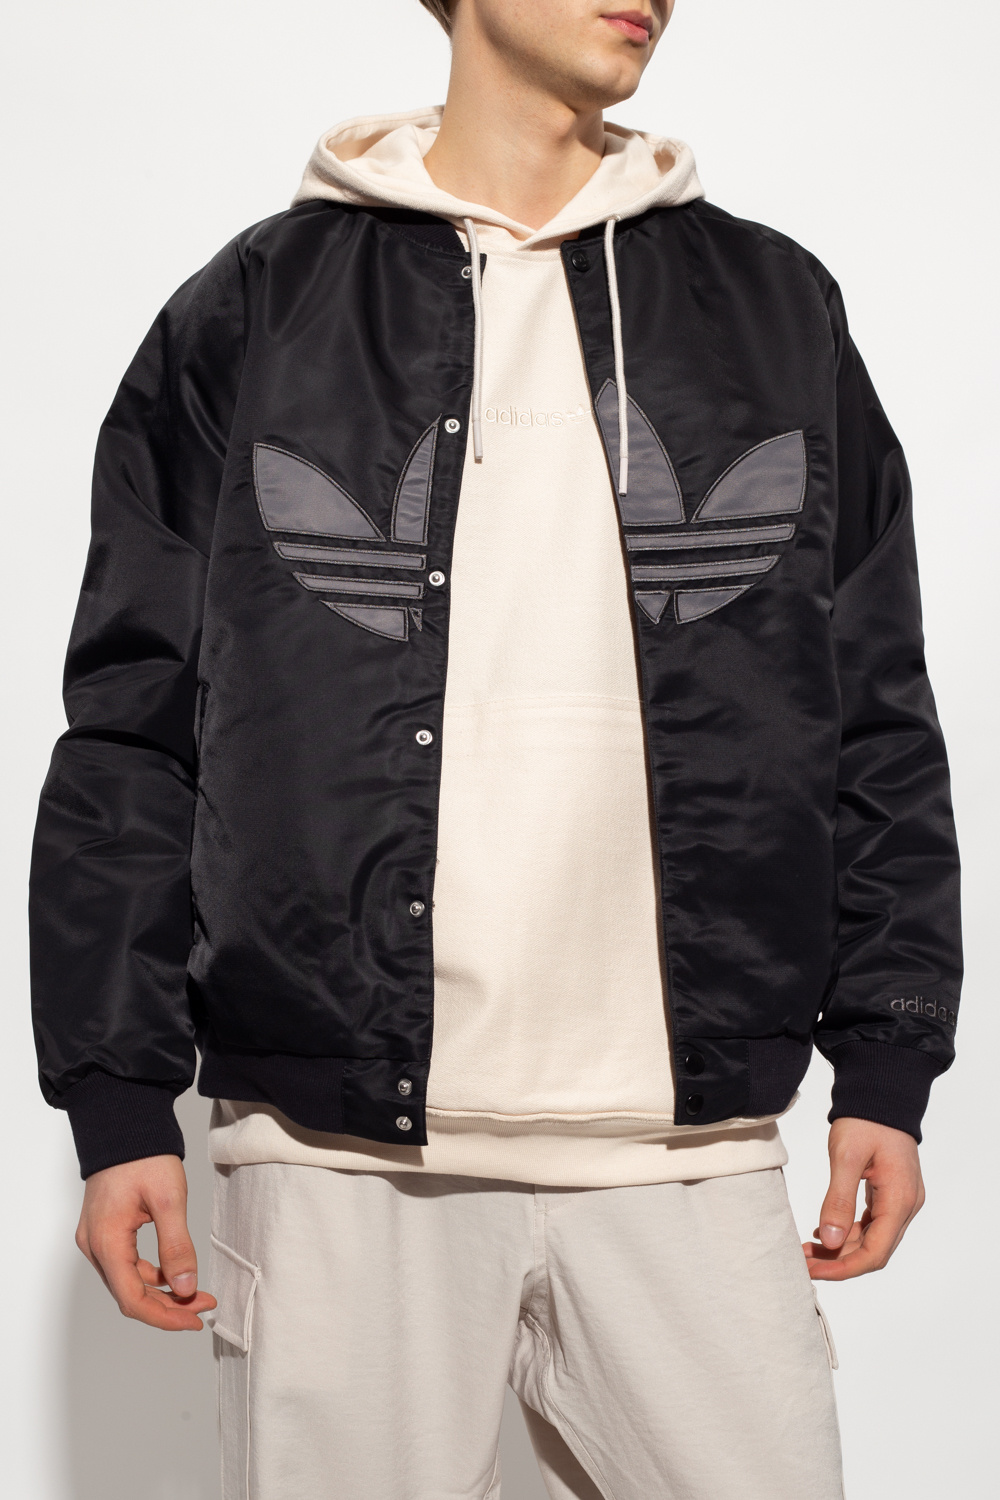 ADIDAS Originals Bomber jacket Men's Clothing | Vitkac